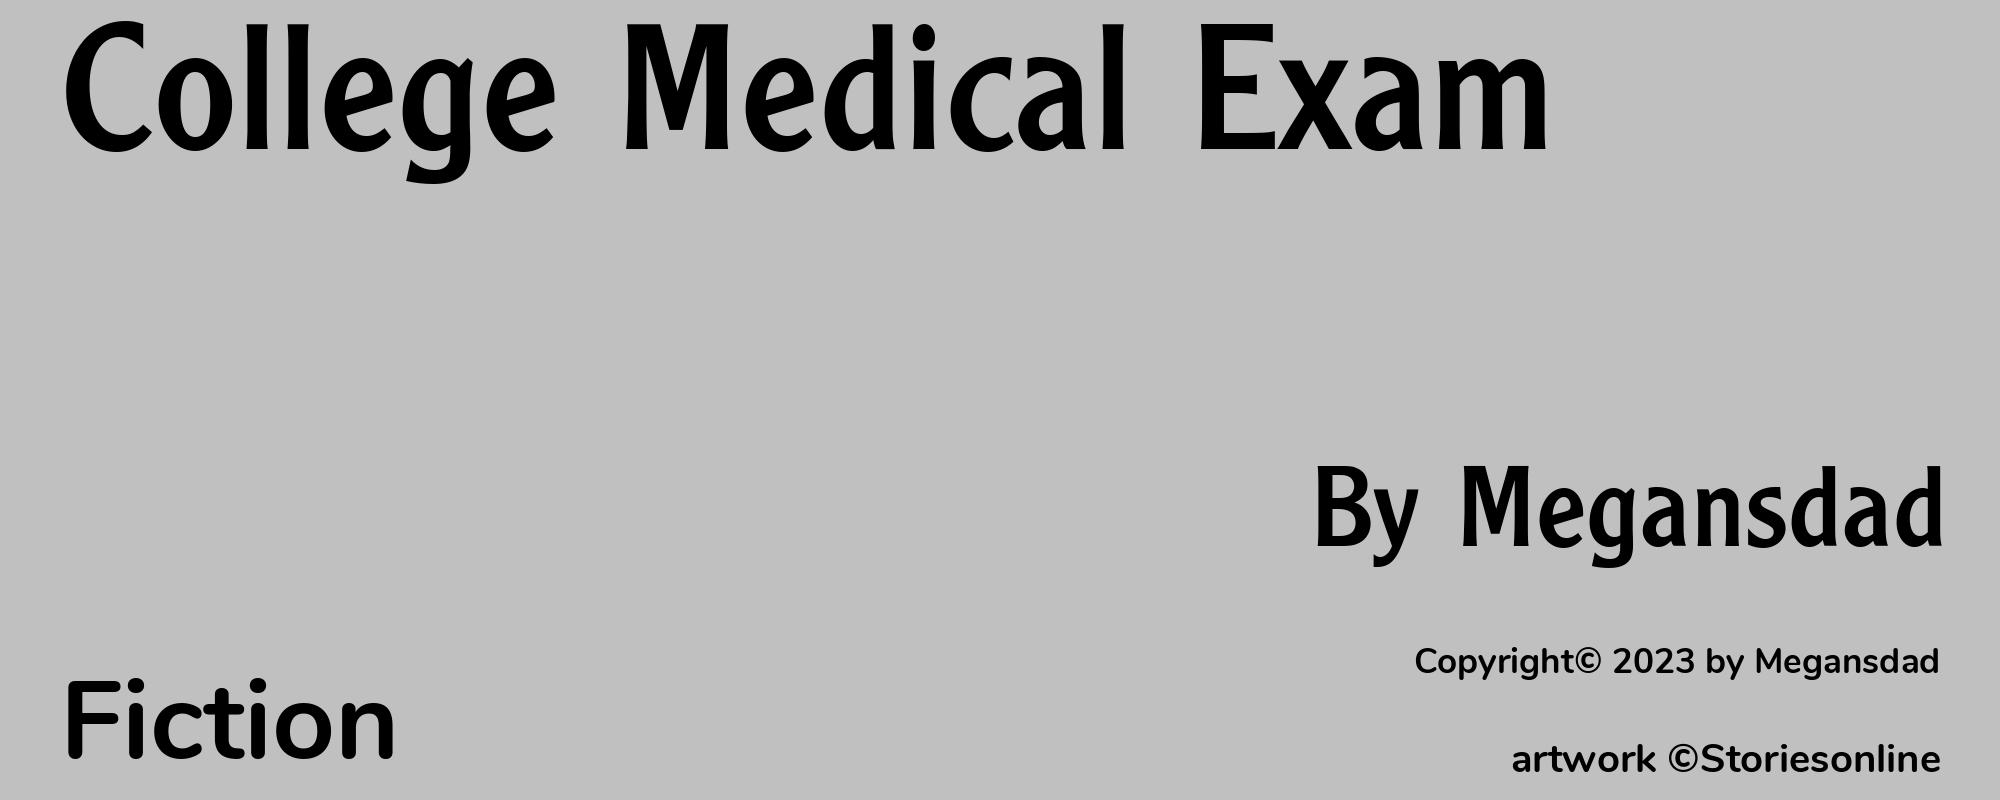 College Medical Exam - Cover